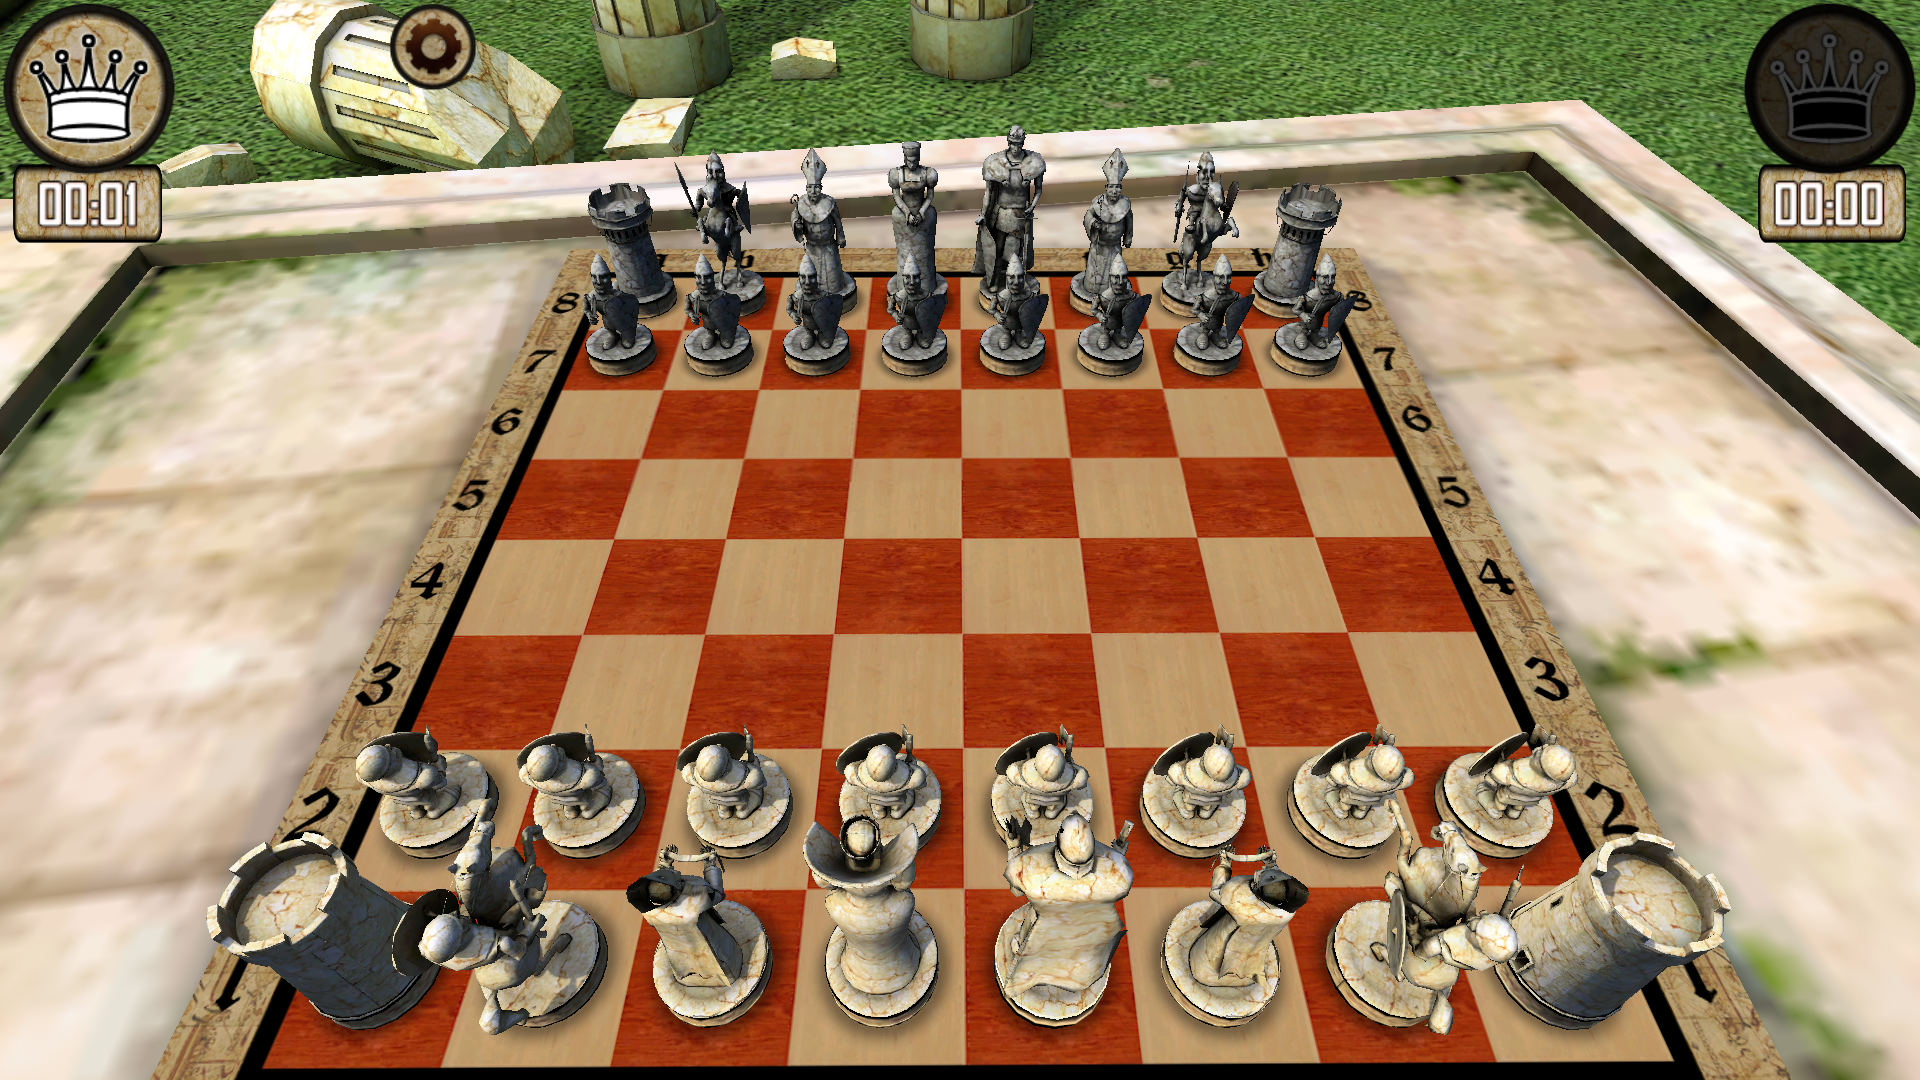 Шахматы играть сам с собой. Шахматы мушкетеры. Шахматы 3д на двоих. Шахматы тематические 3д. Планета шахмат.